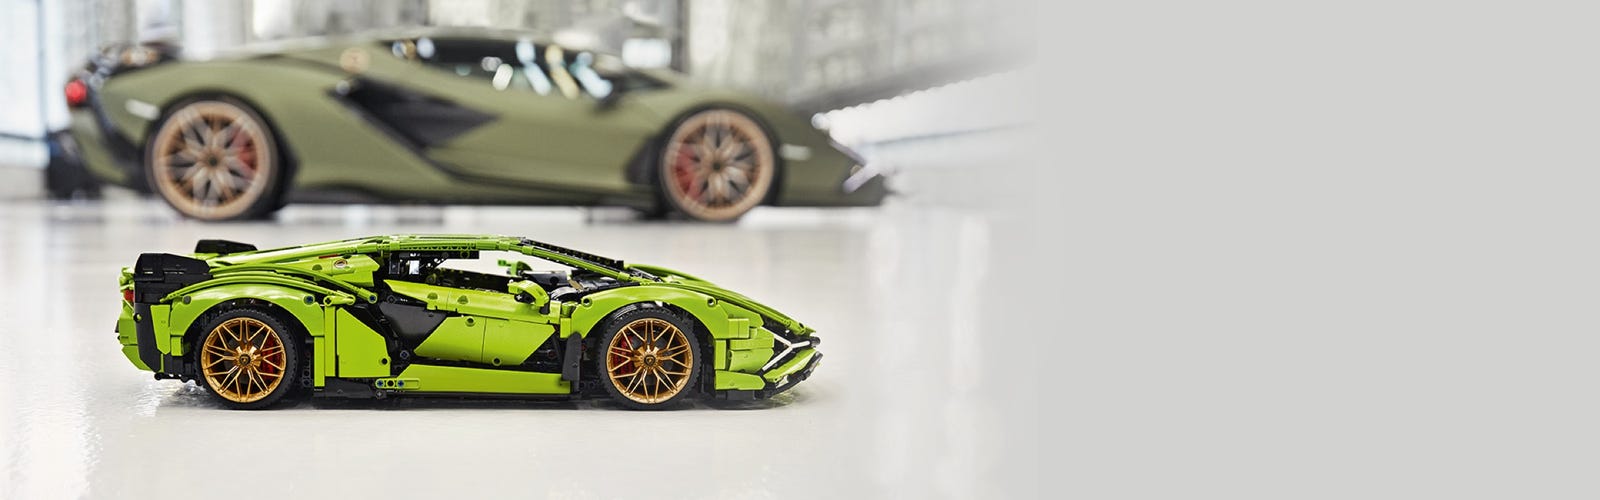 LEGO Technic Lamborghini Sian FKP 37 Set 42115LEGO Technic